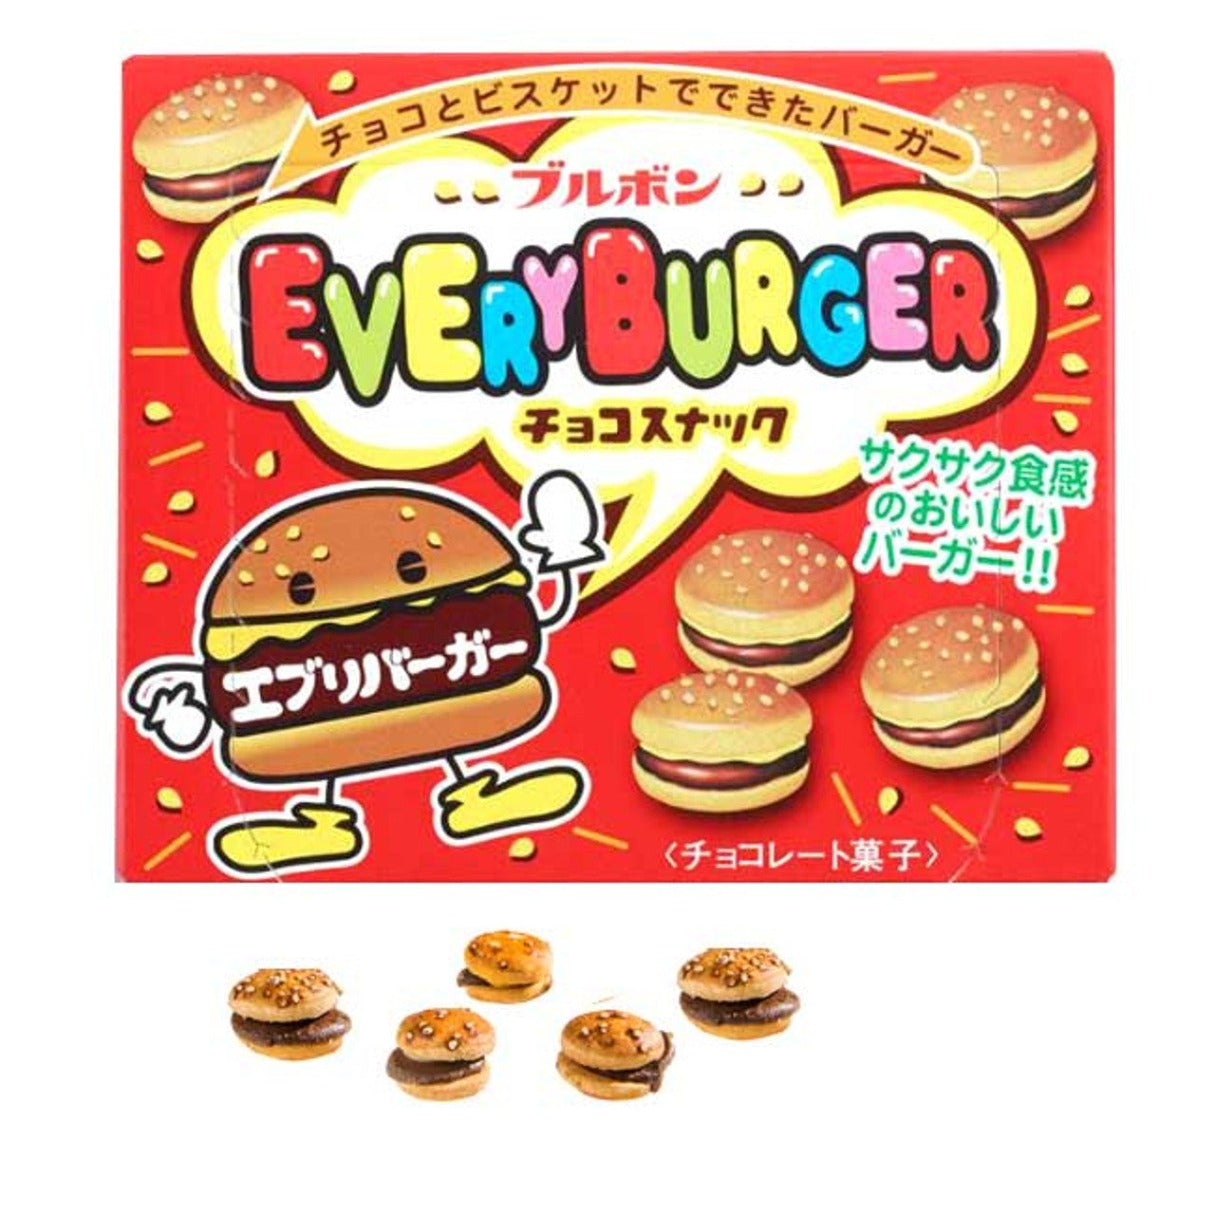 Everyburger Cookies 2.32oz  - 10ct